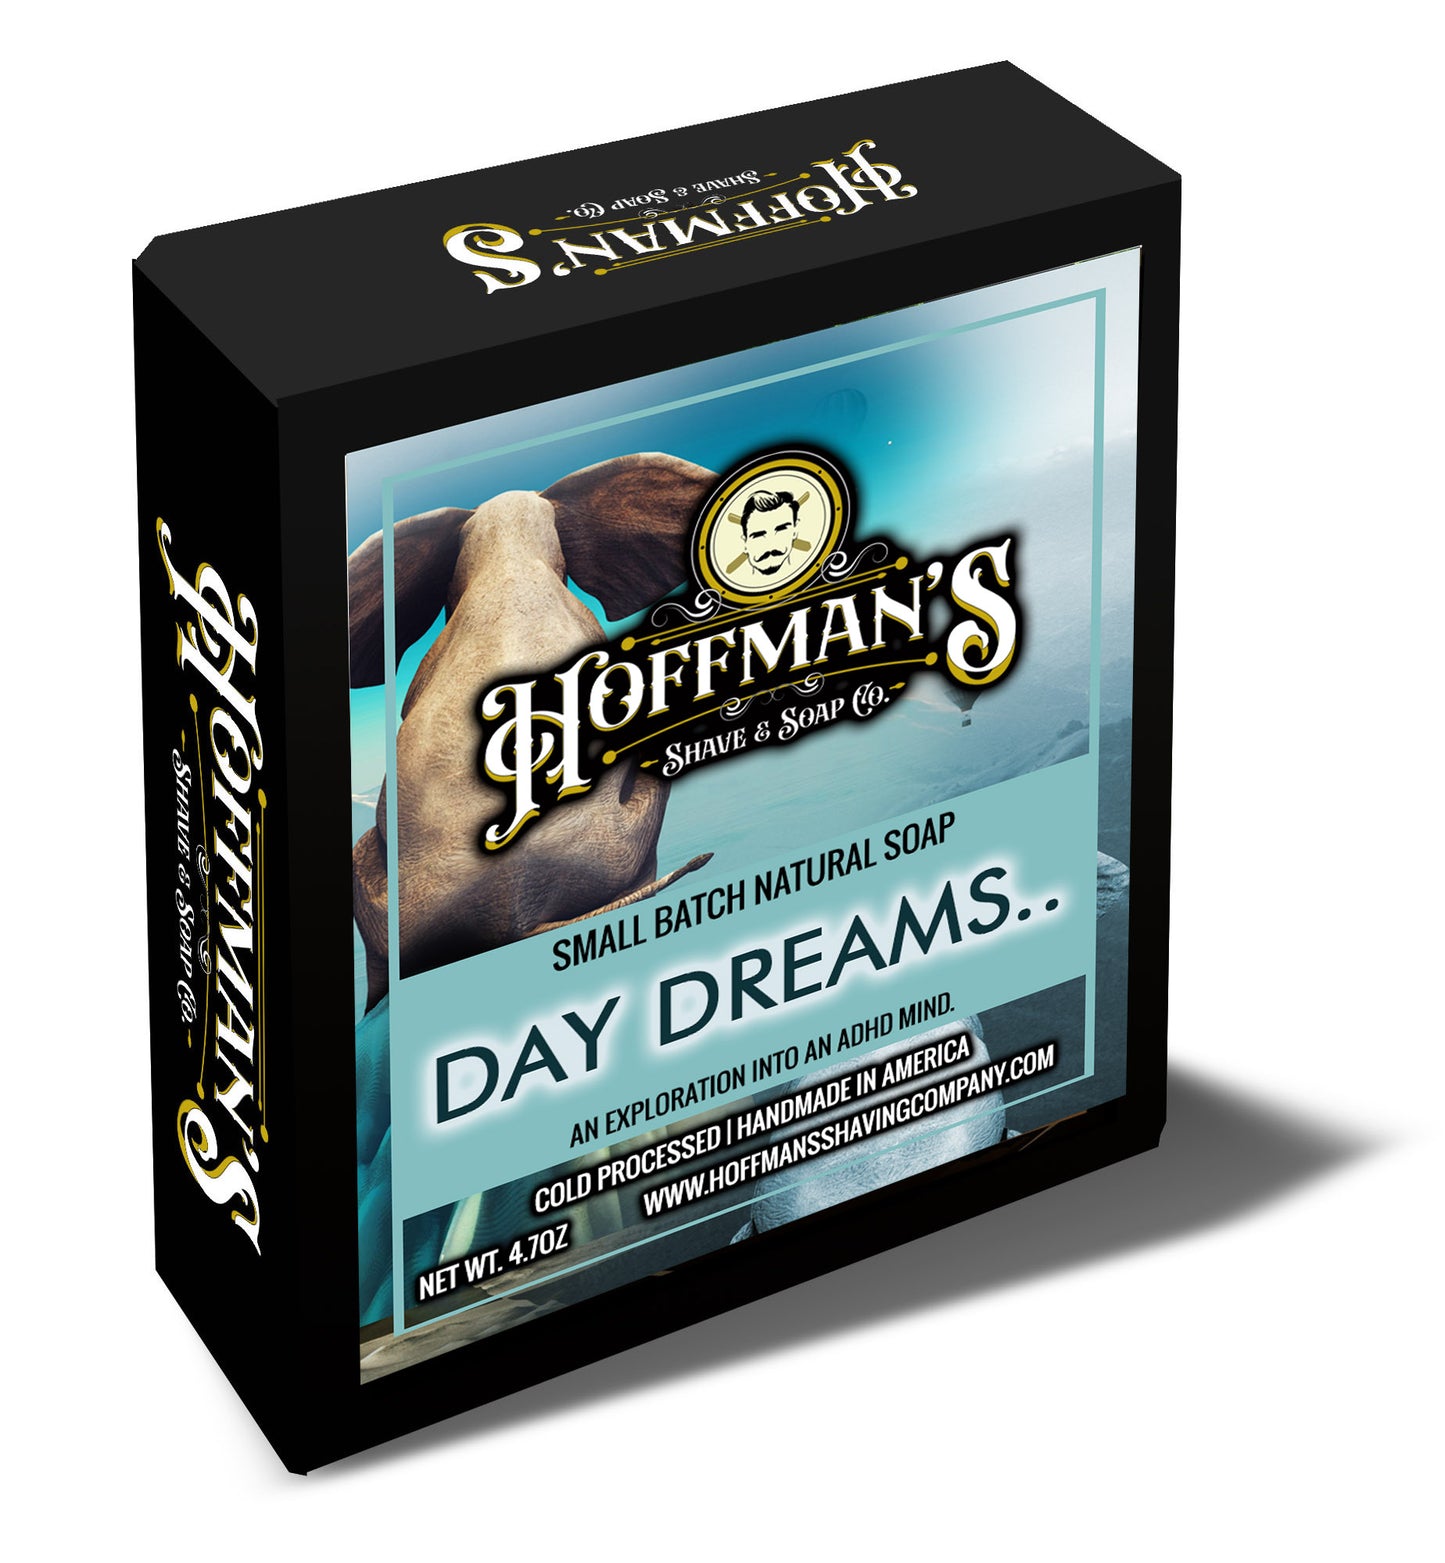 "Day Dreams" (Tonka Bean, Blue Cotton Candy, Anise) Bar Soap